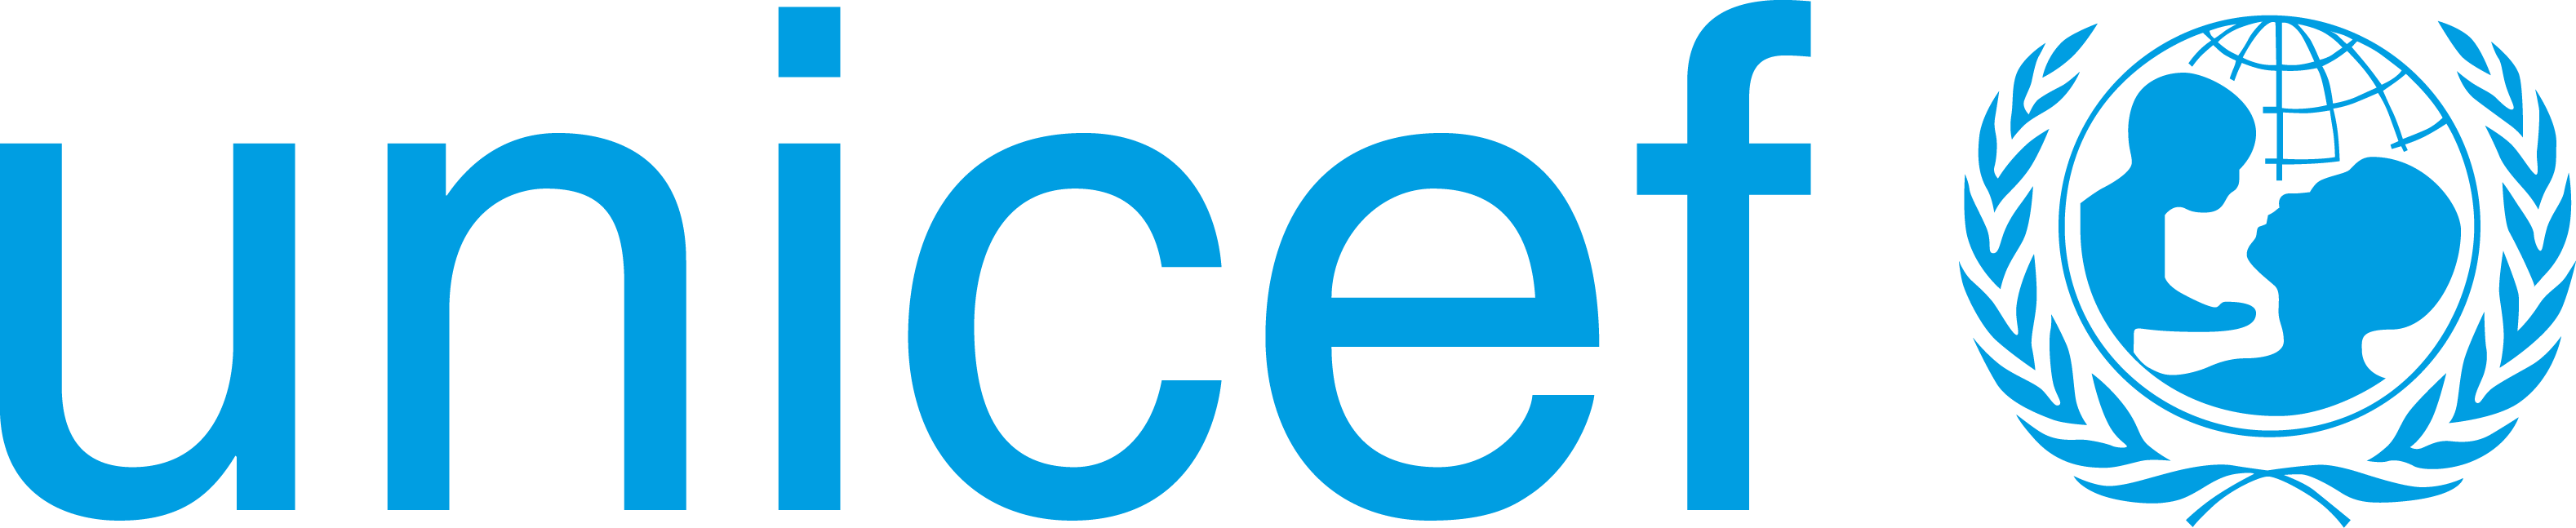 UNICEF Logo png